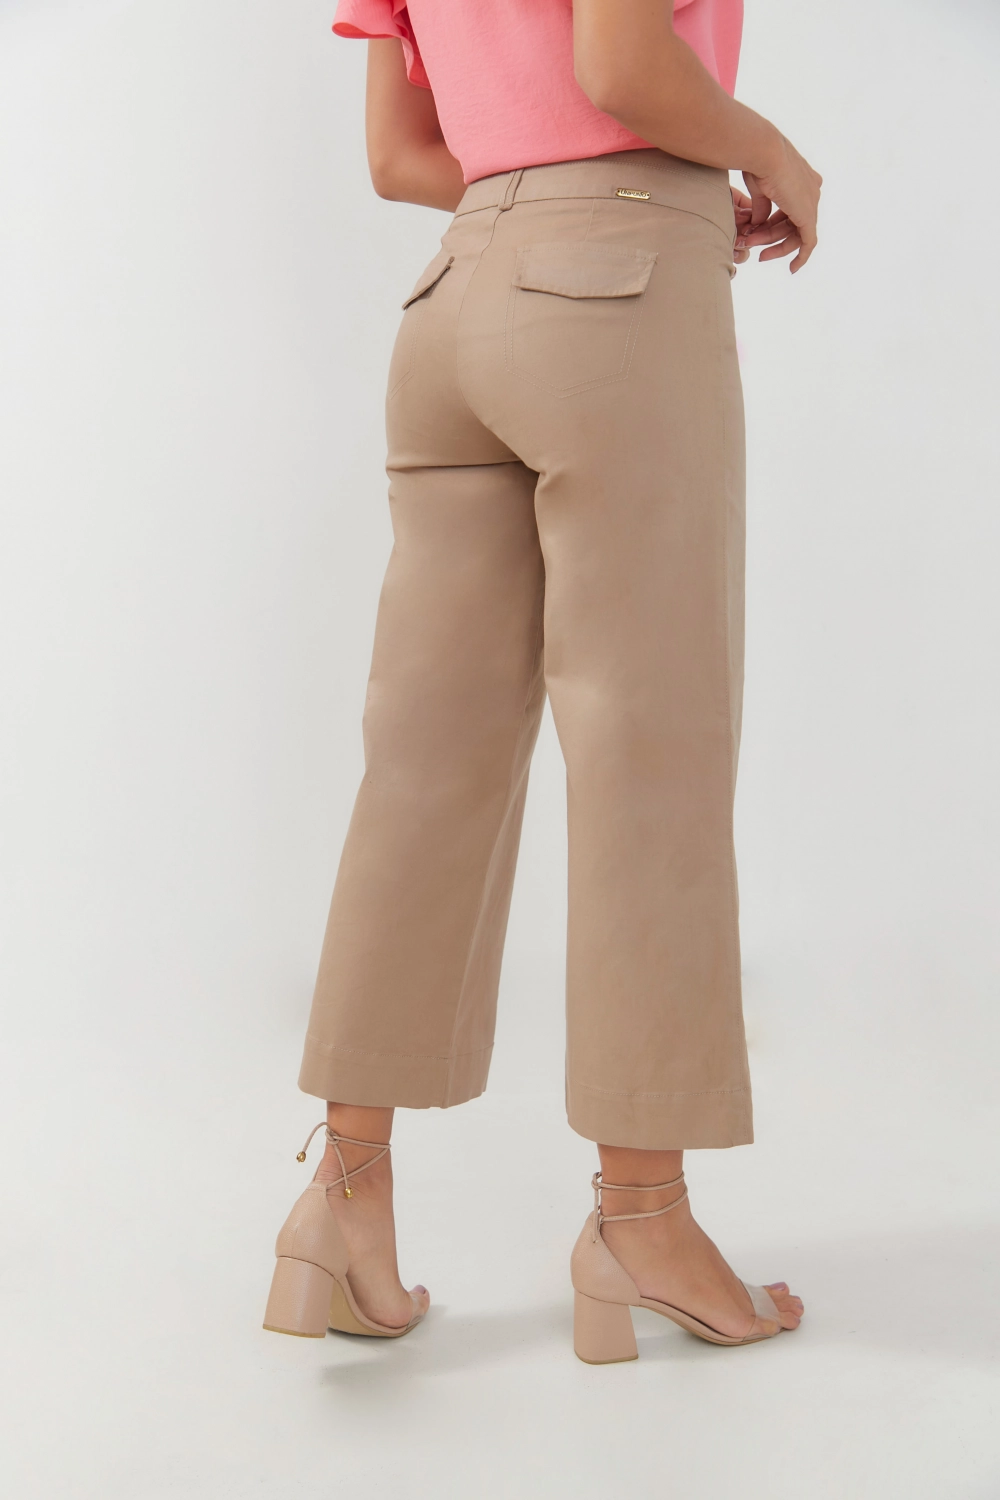 Pantalón cropped en dril pretina ancha. Kaki talla 14